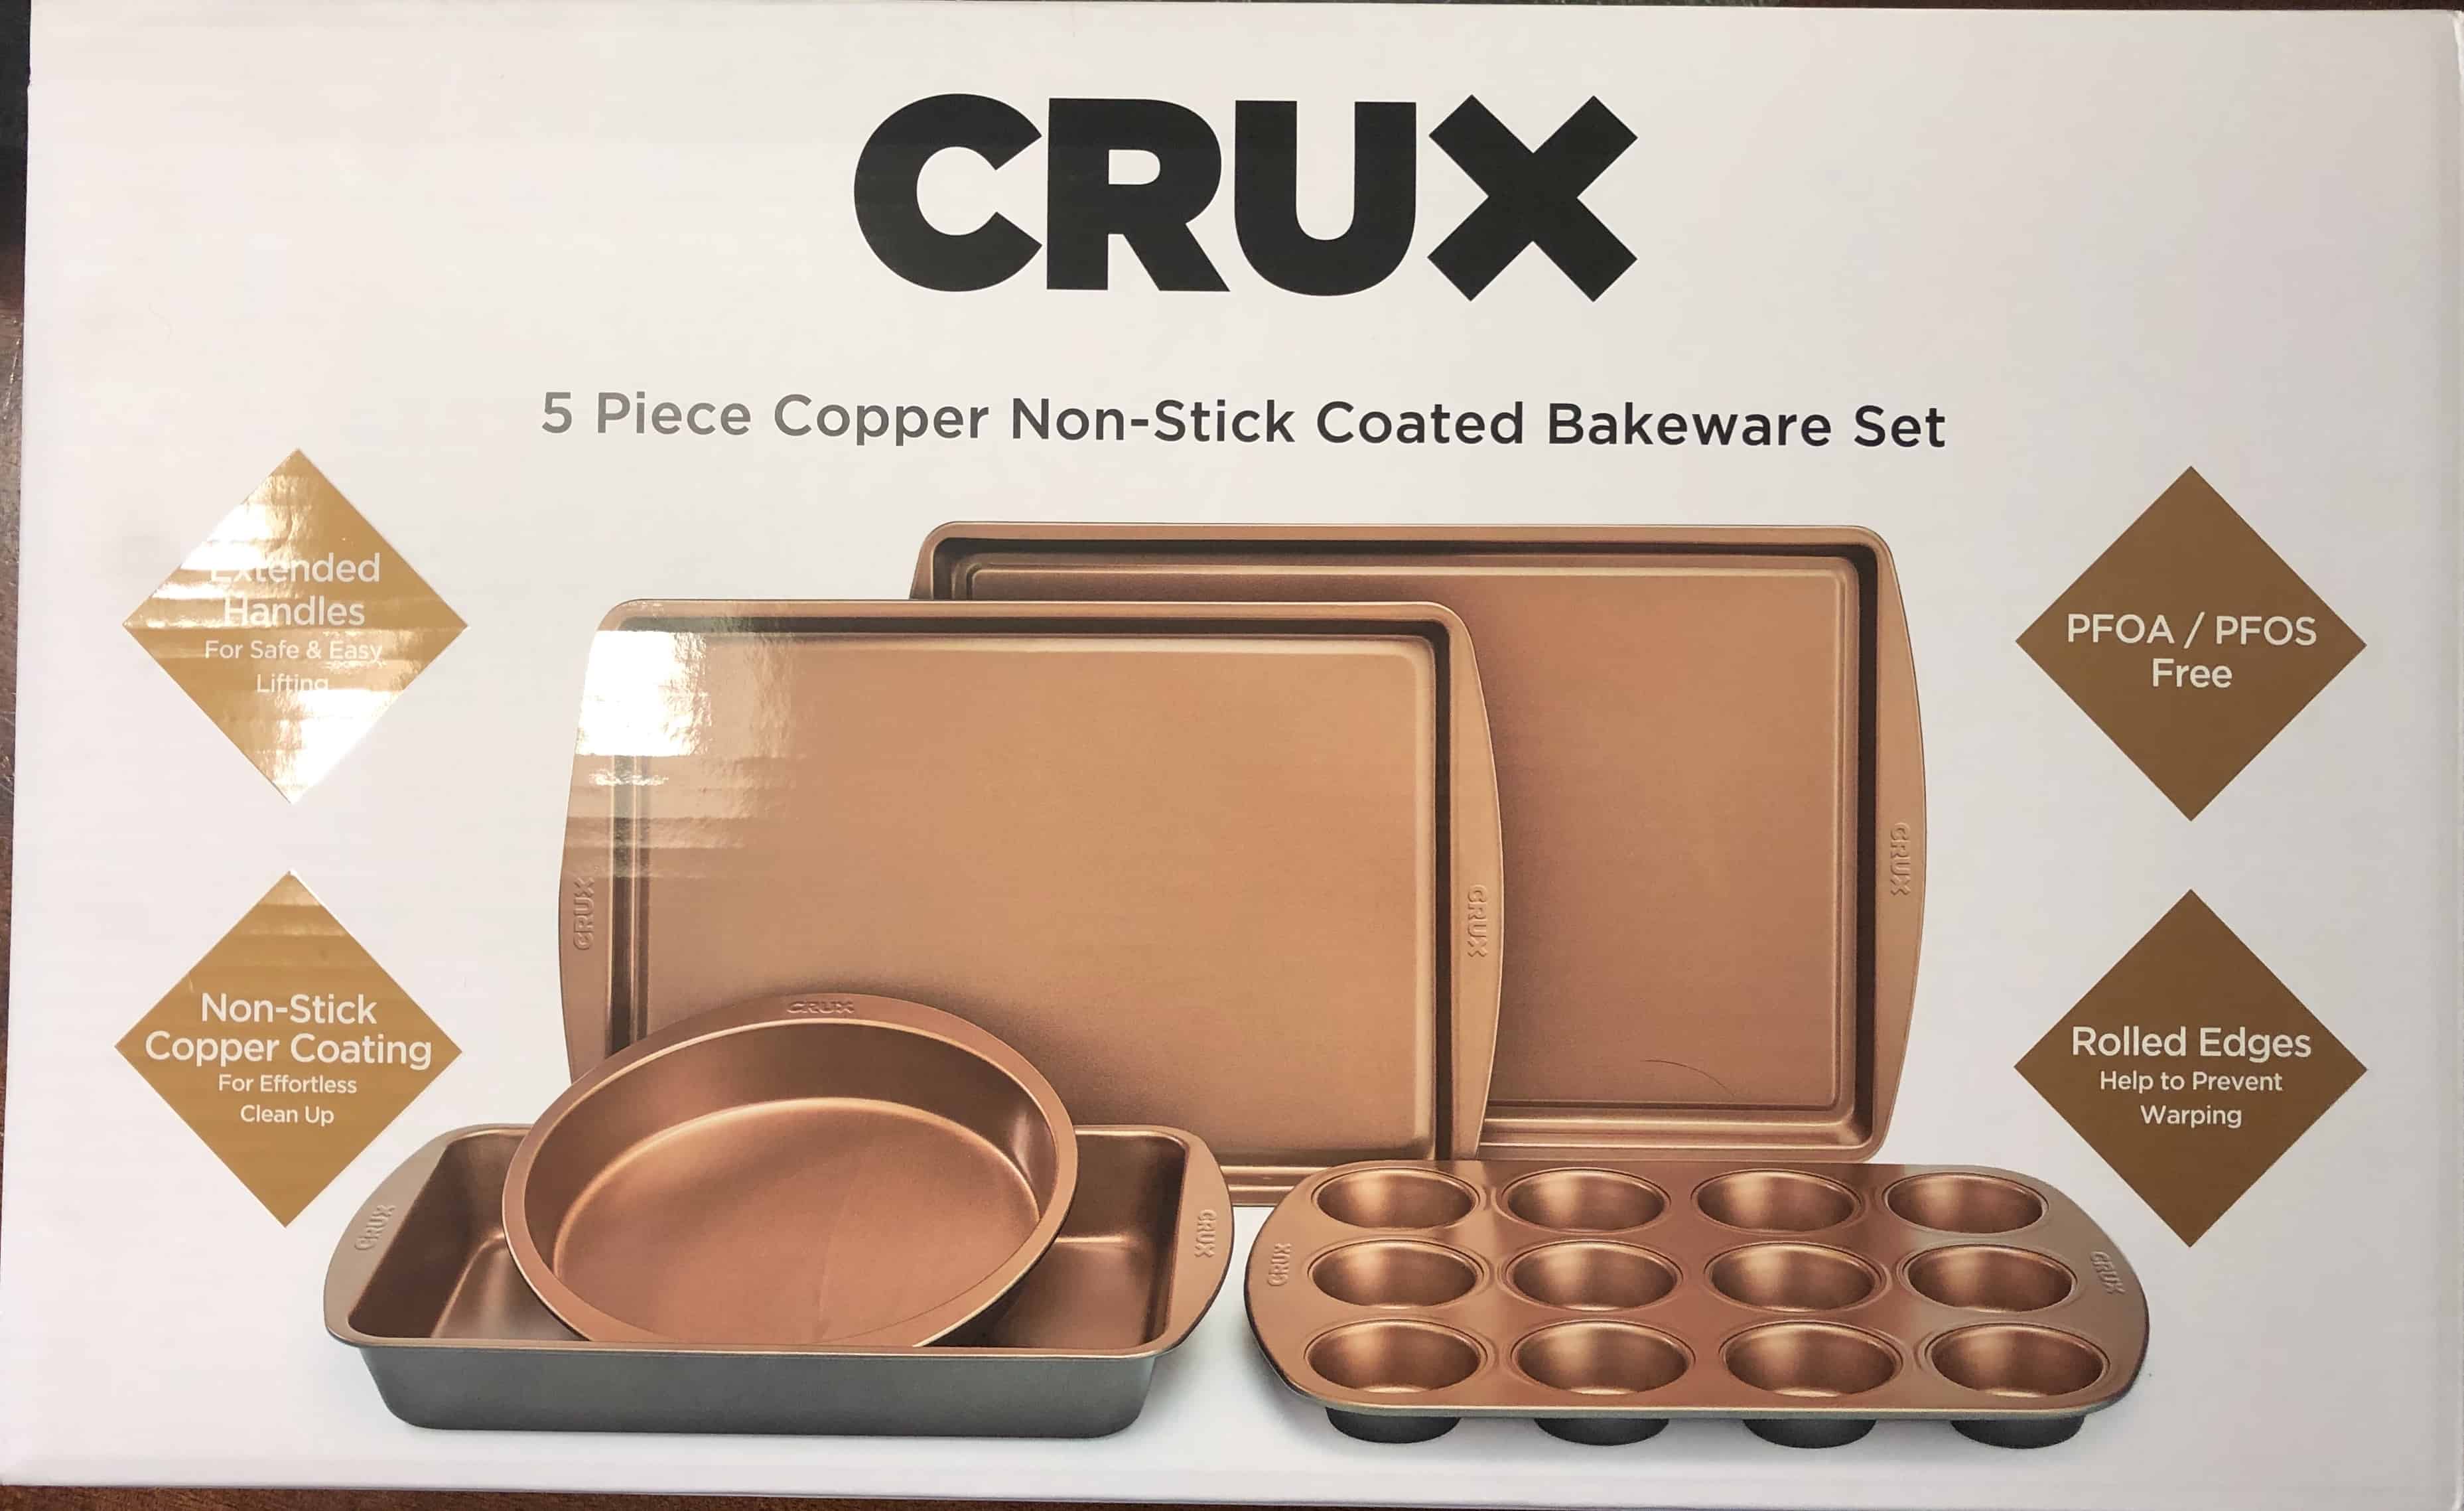 Crux 5PC Cooper Non-Stick Coated Bakeware Set $19.99 at Macy’s (Reg $83.99)